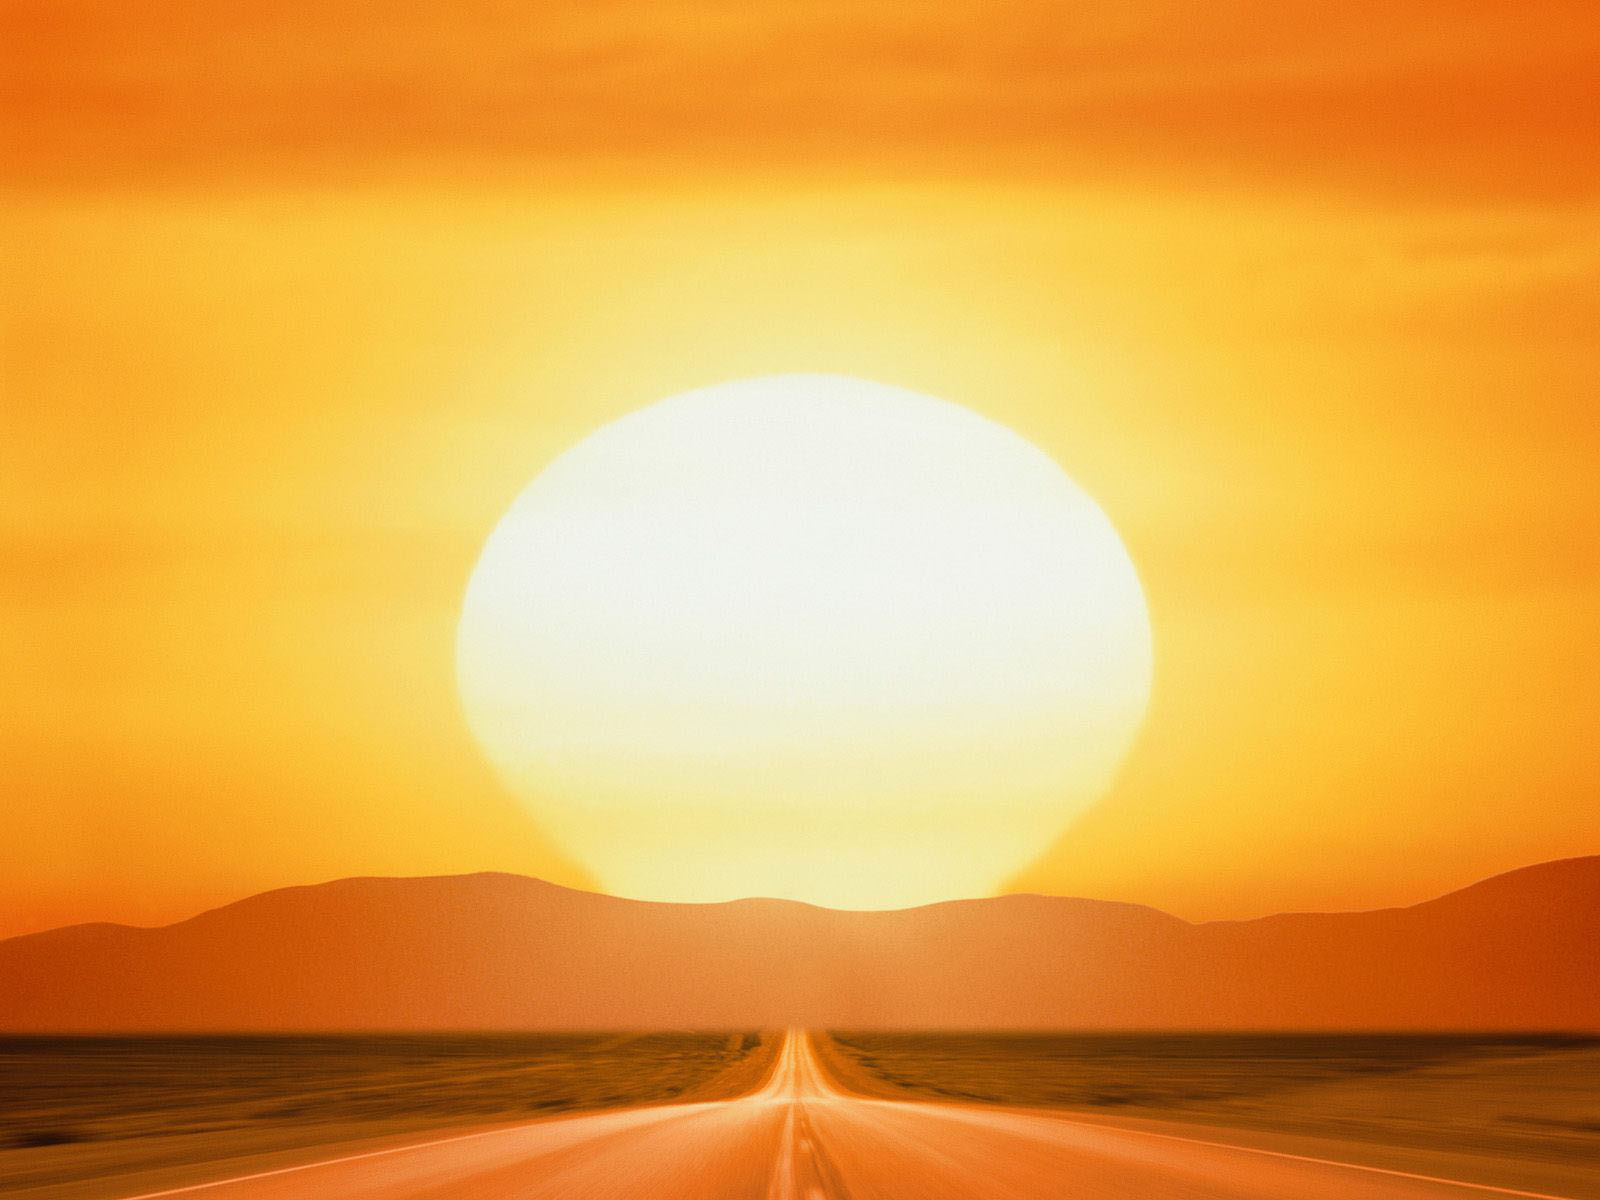 Nevada Desert Highway on a Sunny Day pics